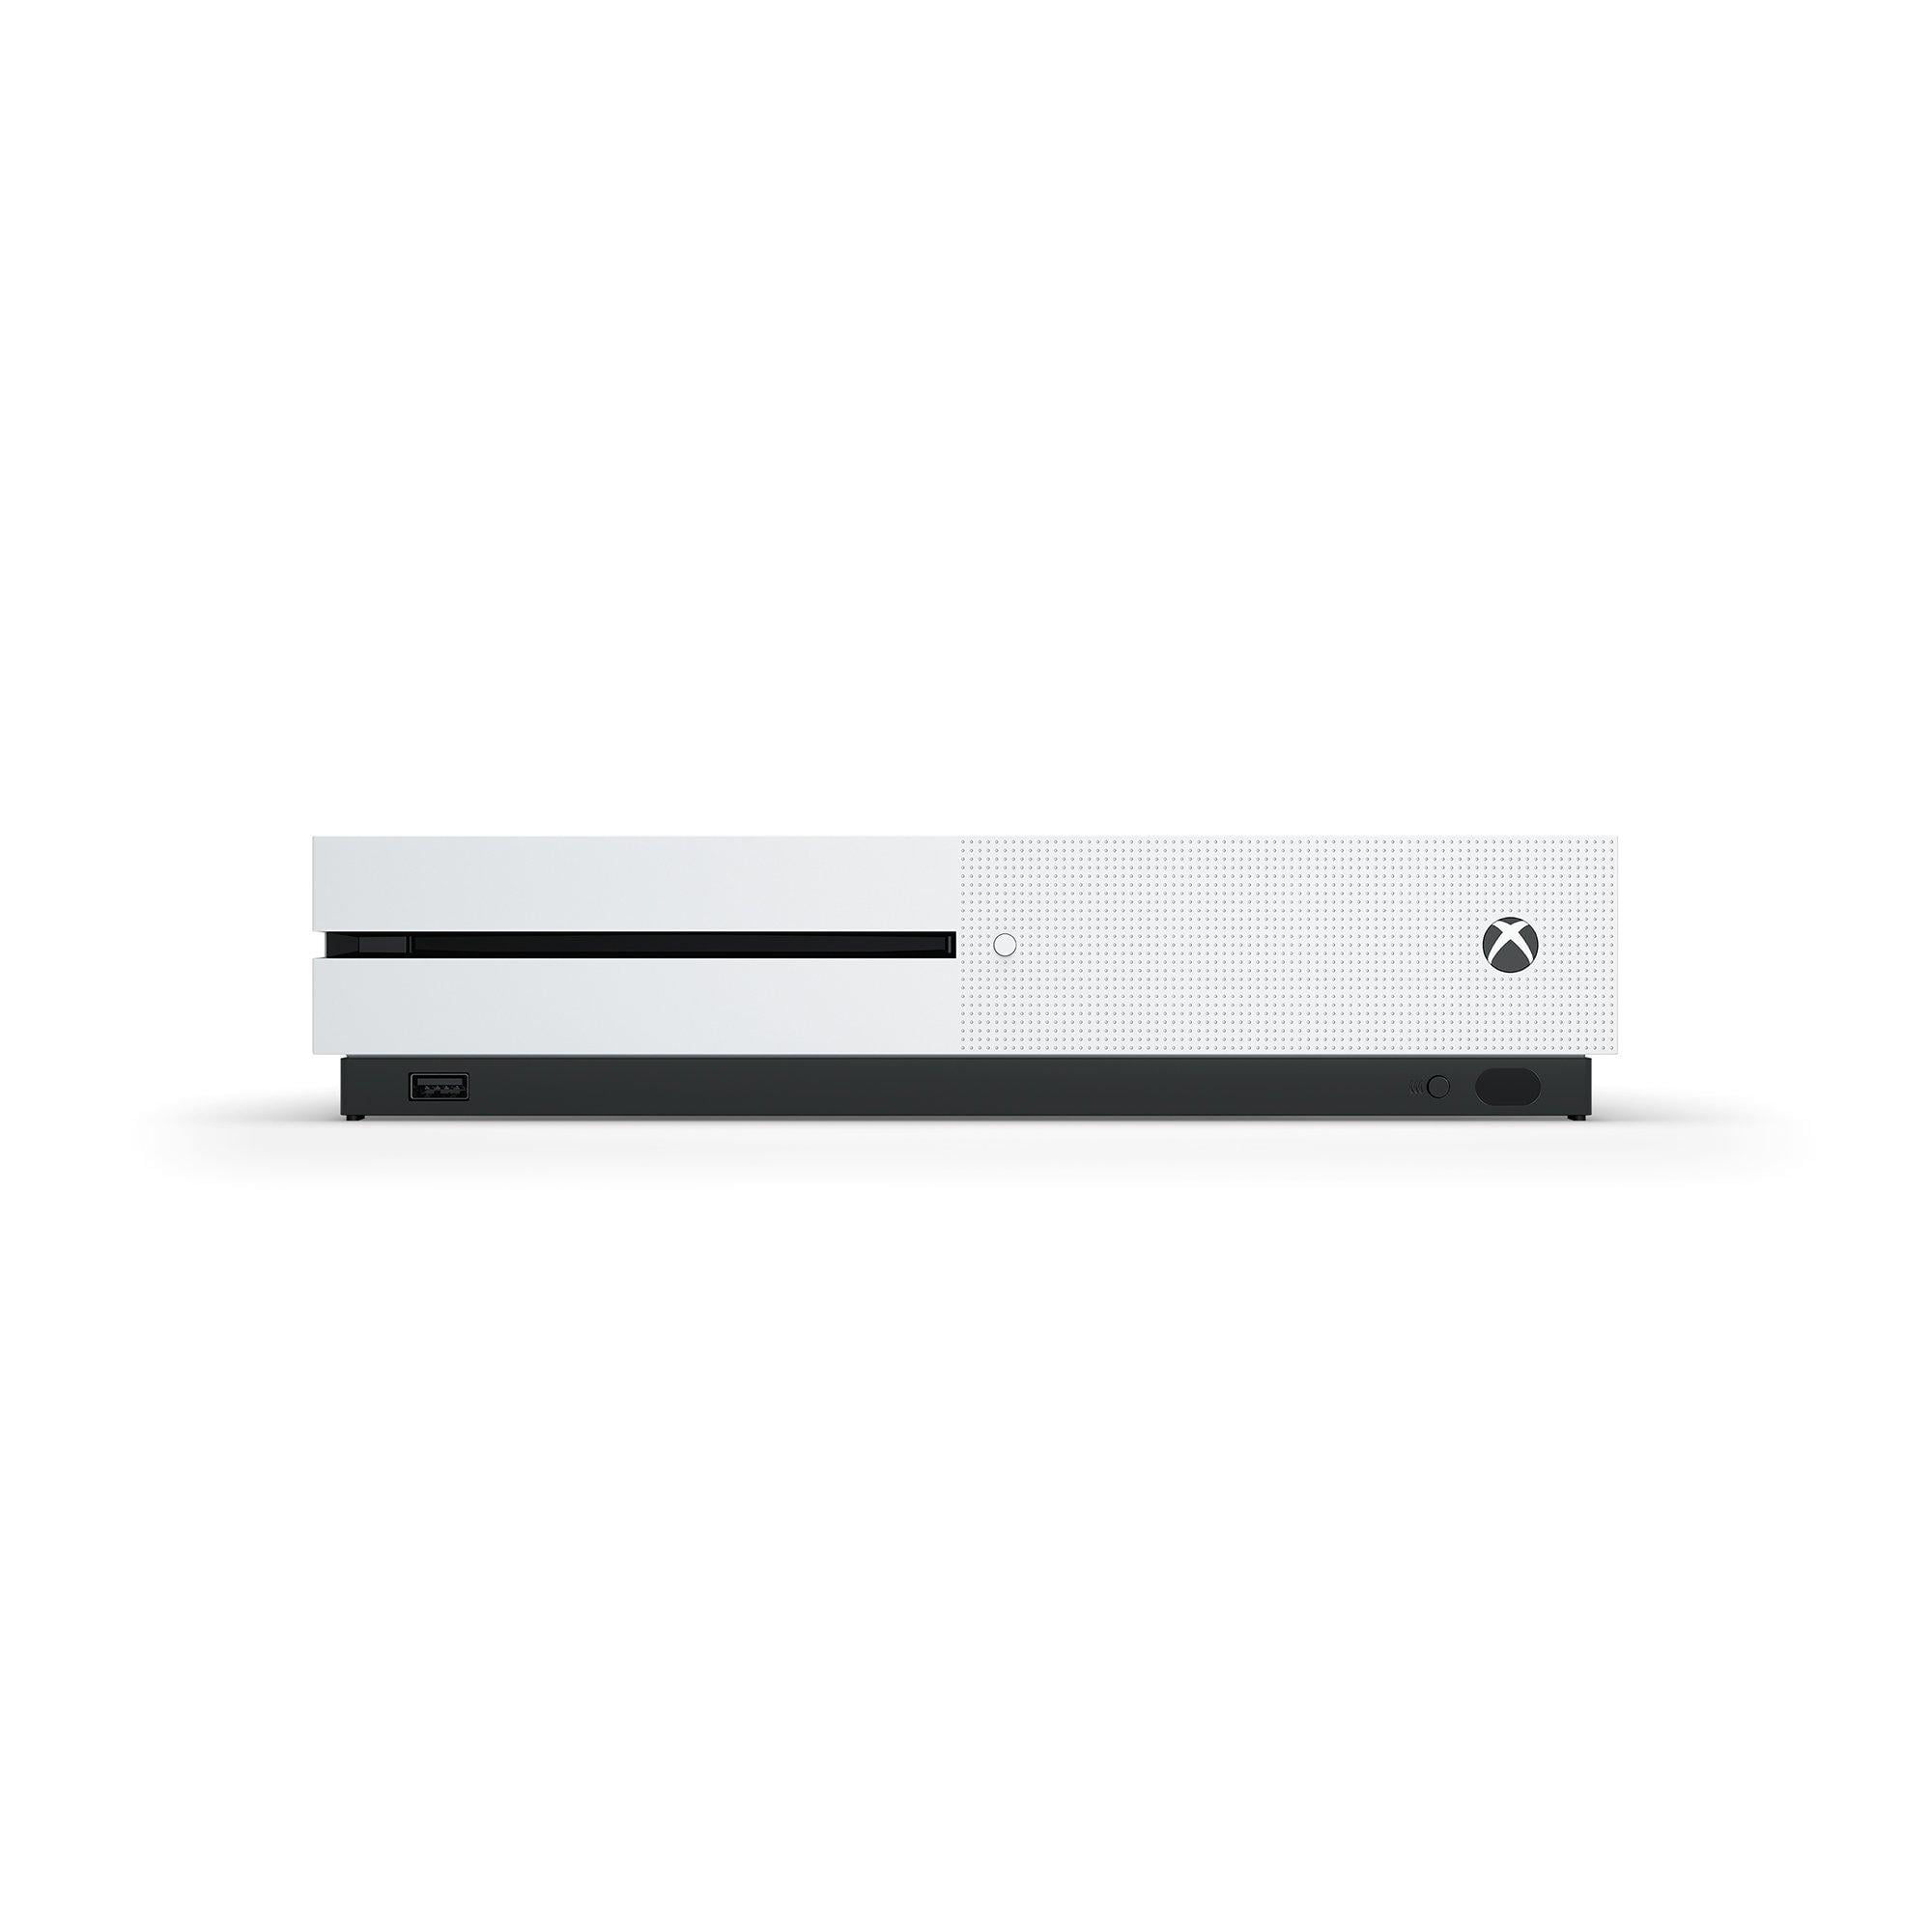 Empty Console Box for Microsoft Xbox One S White 500GB No S - Variant